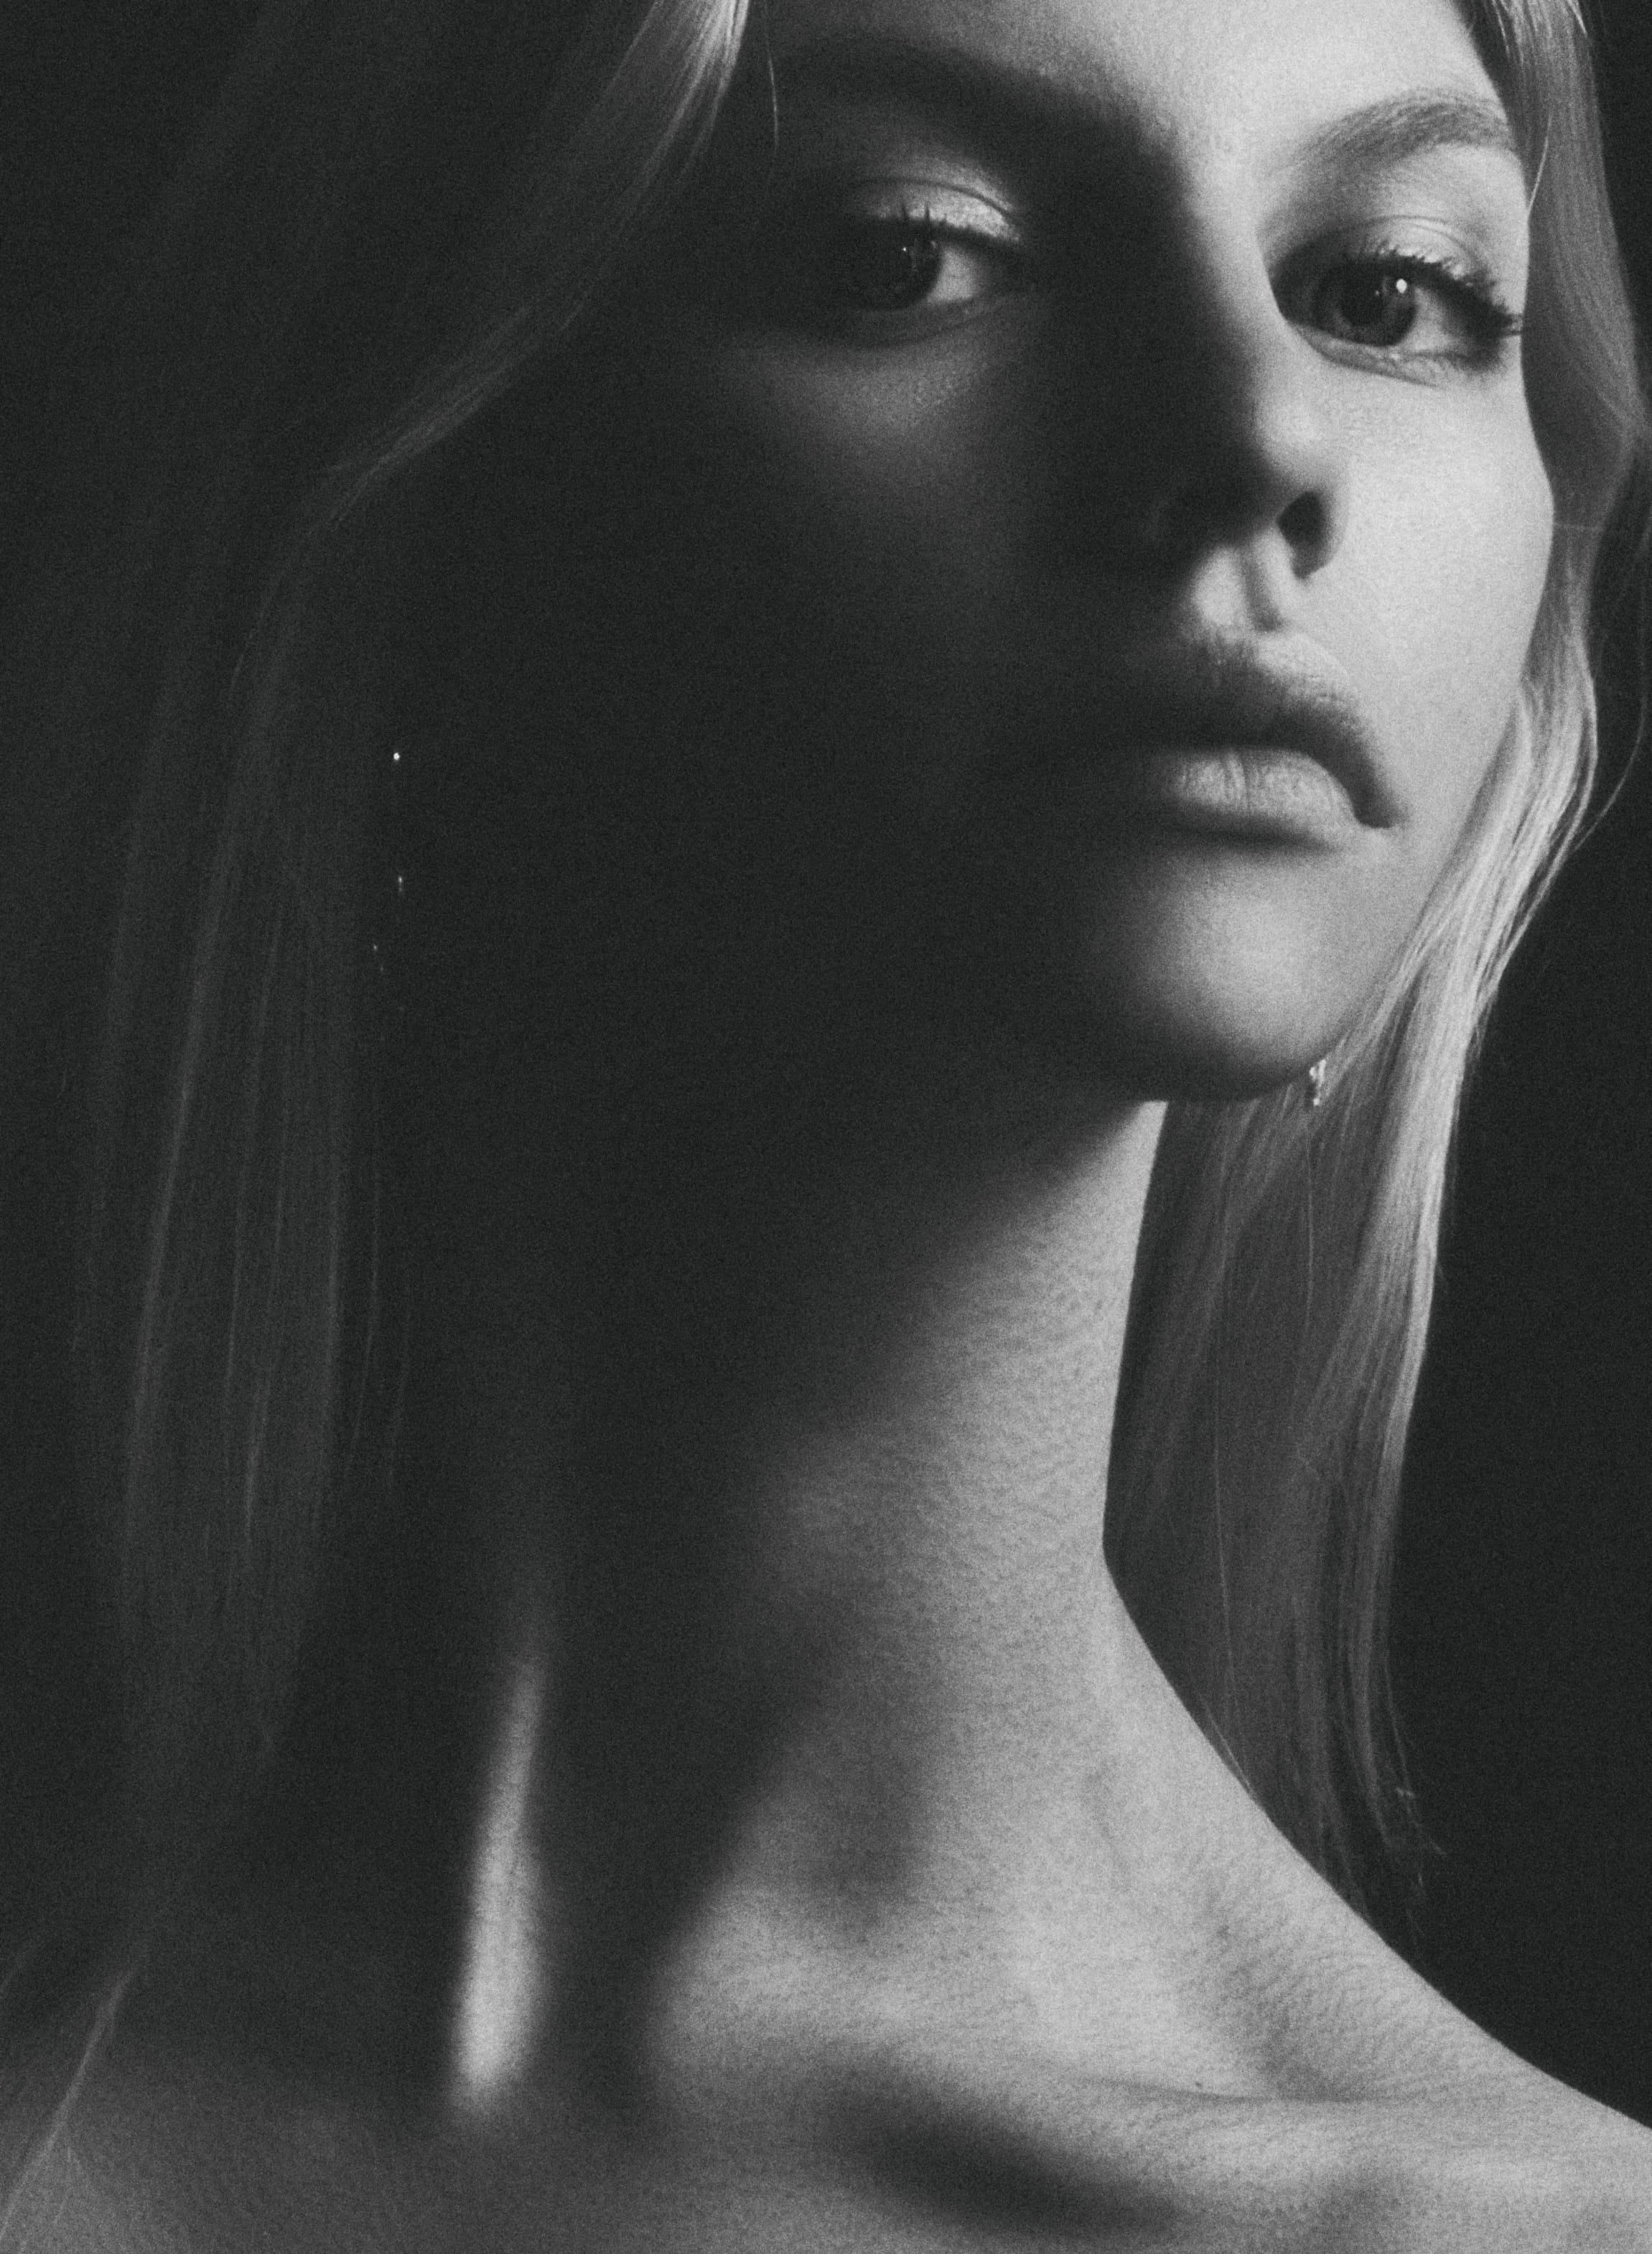 Free Download Hd Wallpaper Monochrome Photo Of Woman Attractive Beautiful Beauty Black 